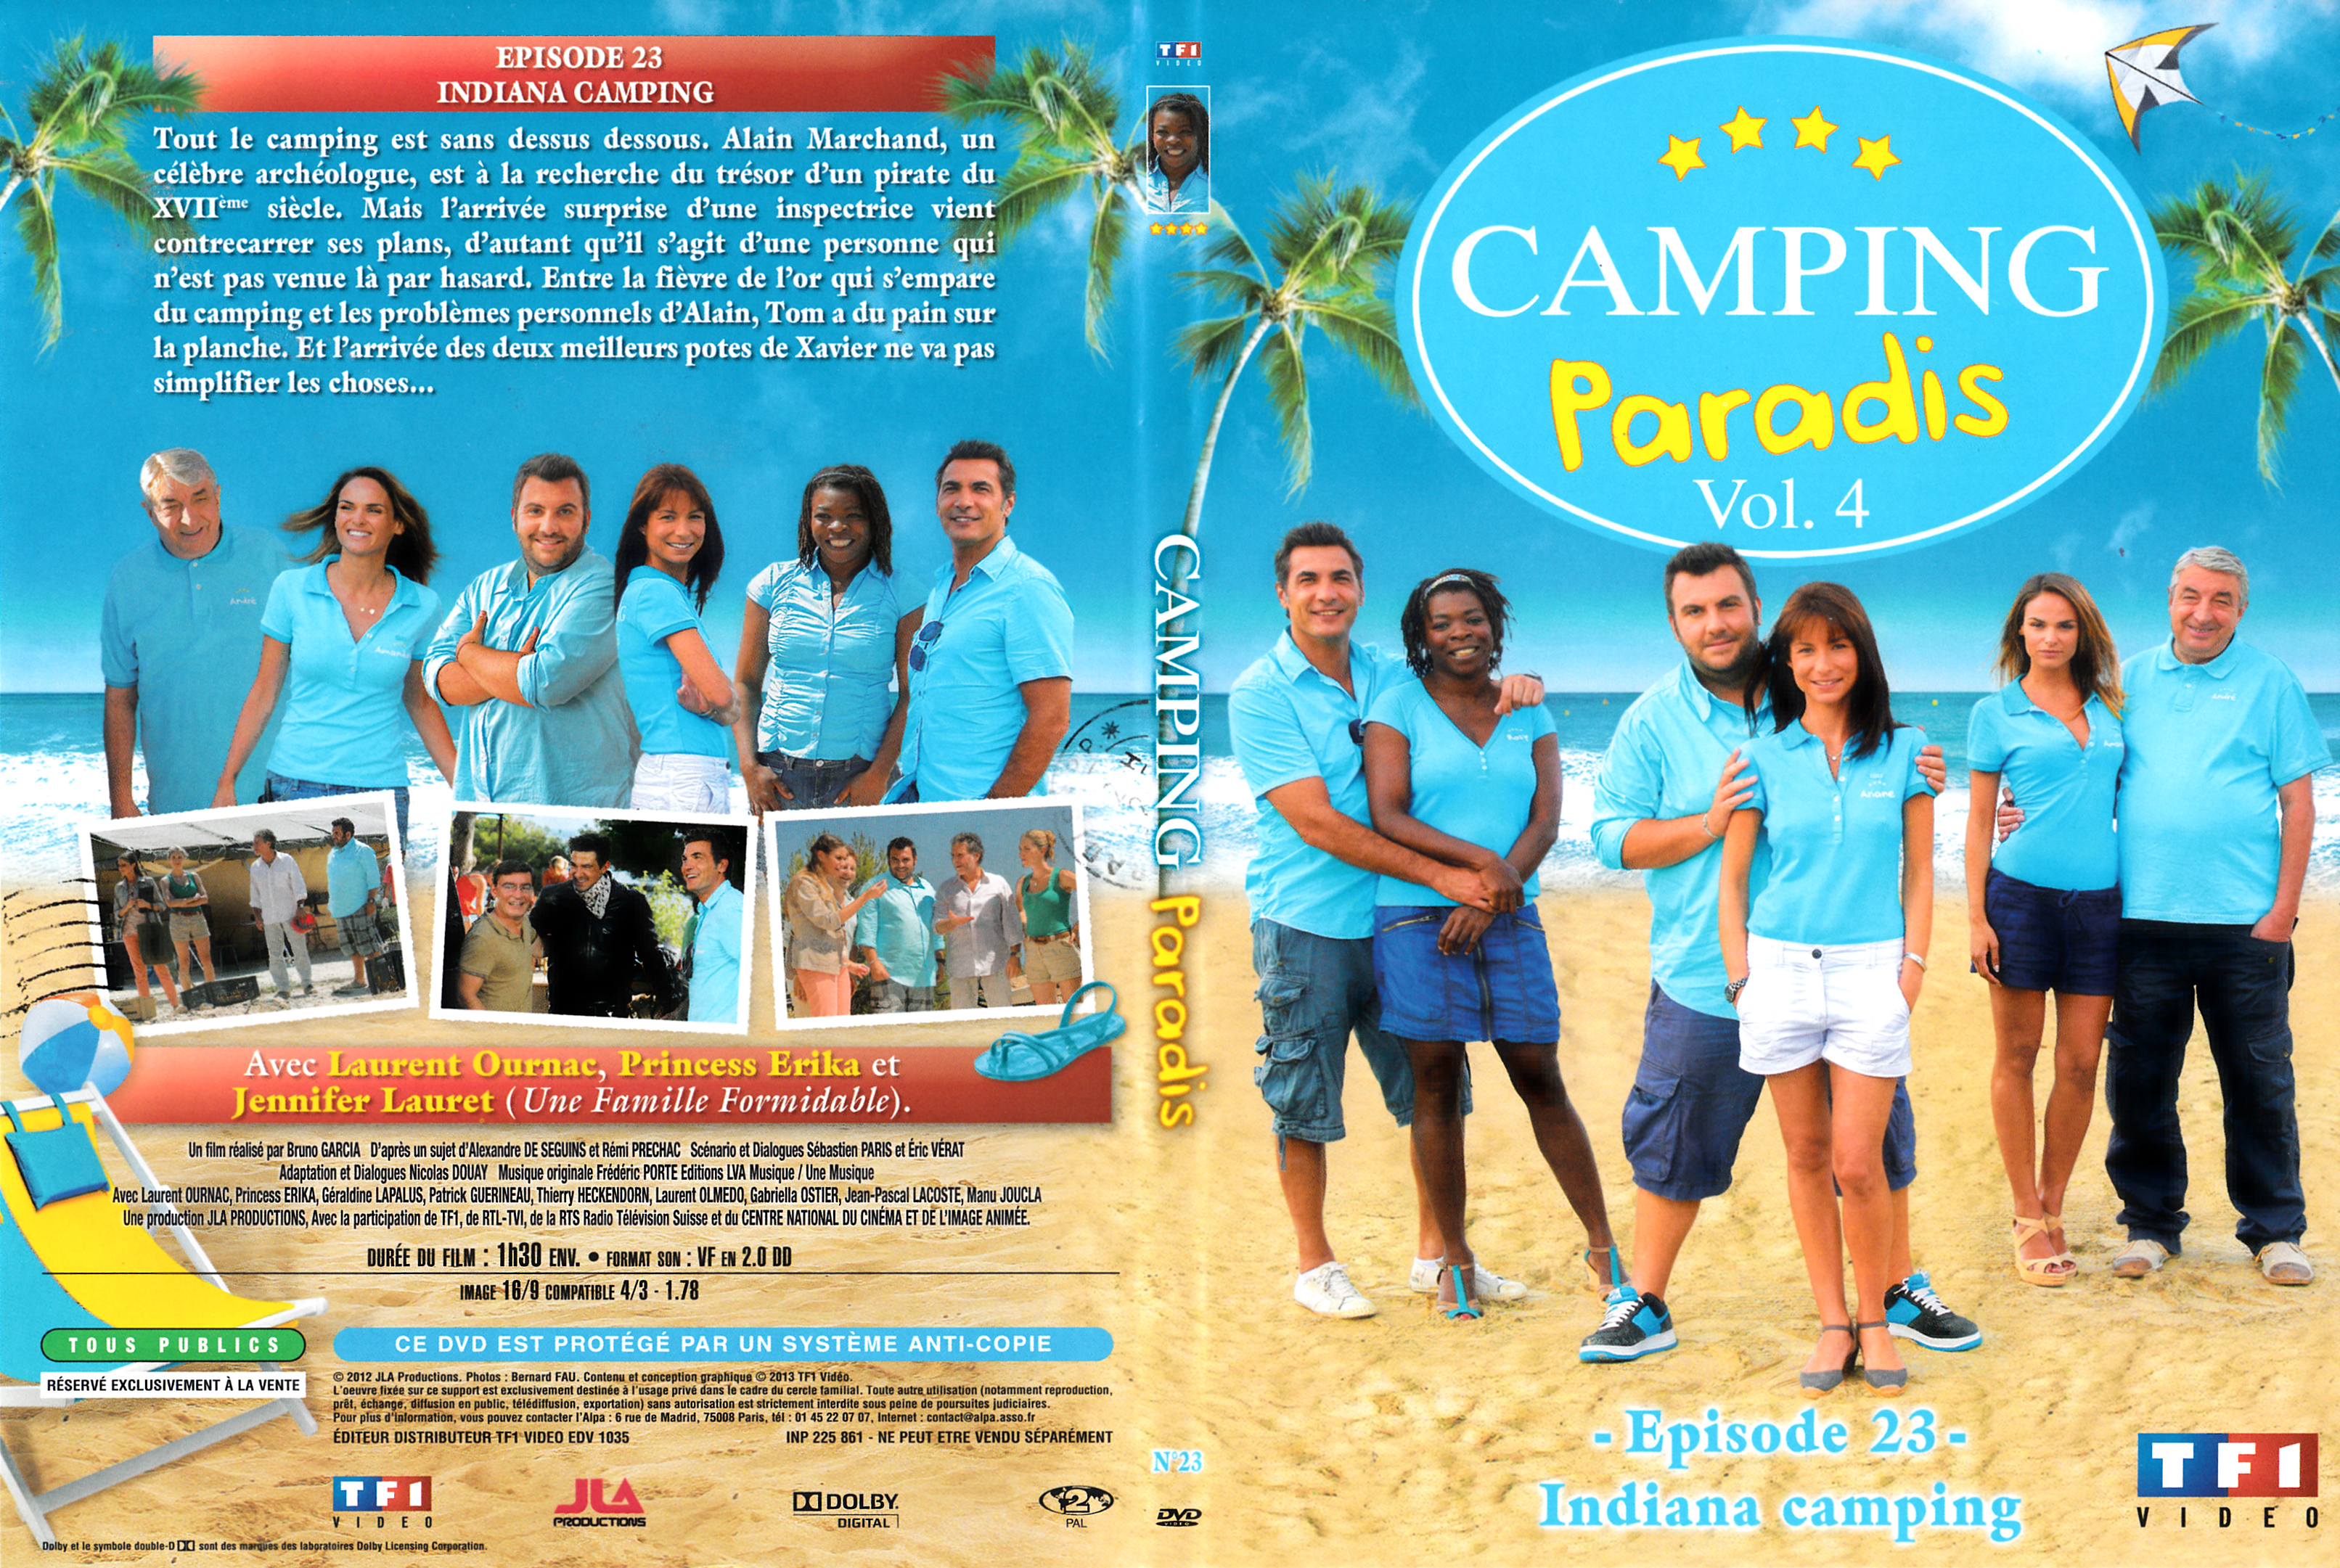 Jaquette DVD Camping Paradis vol 23